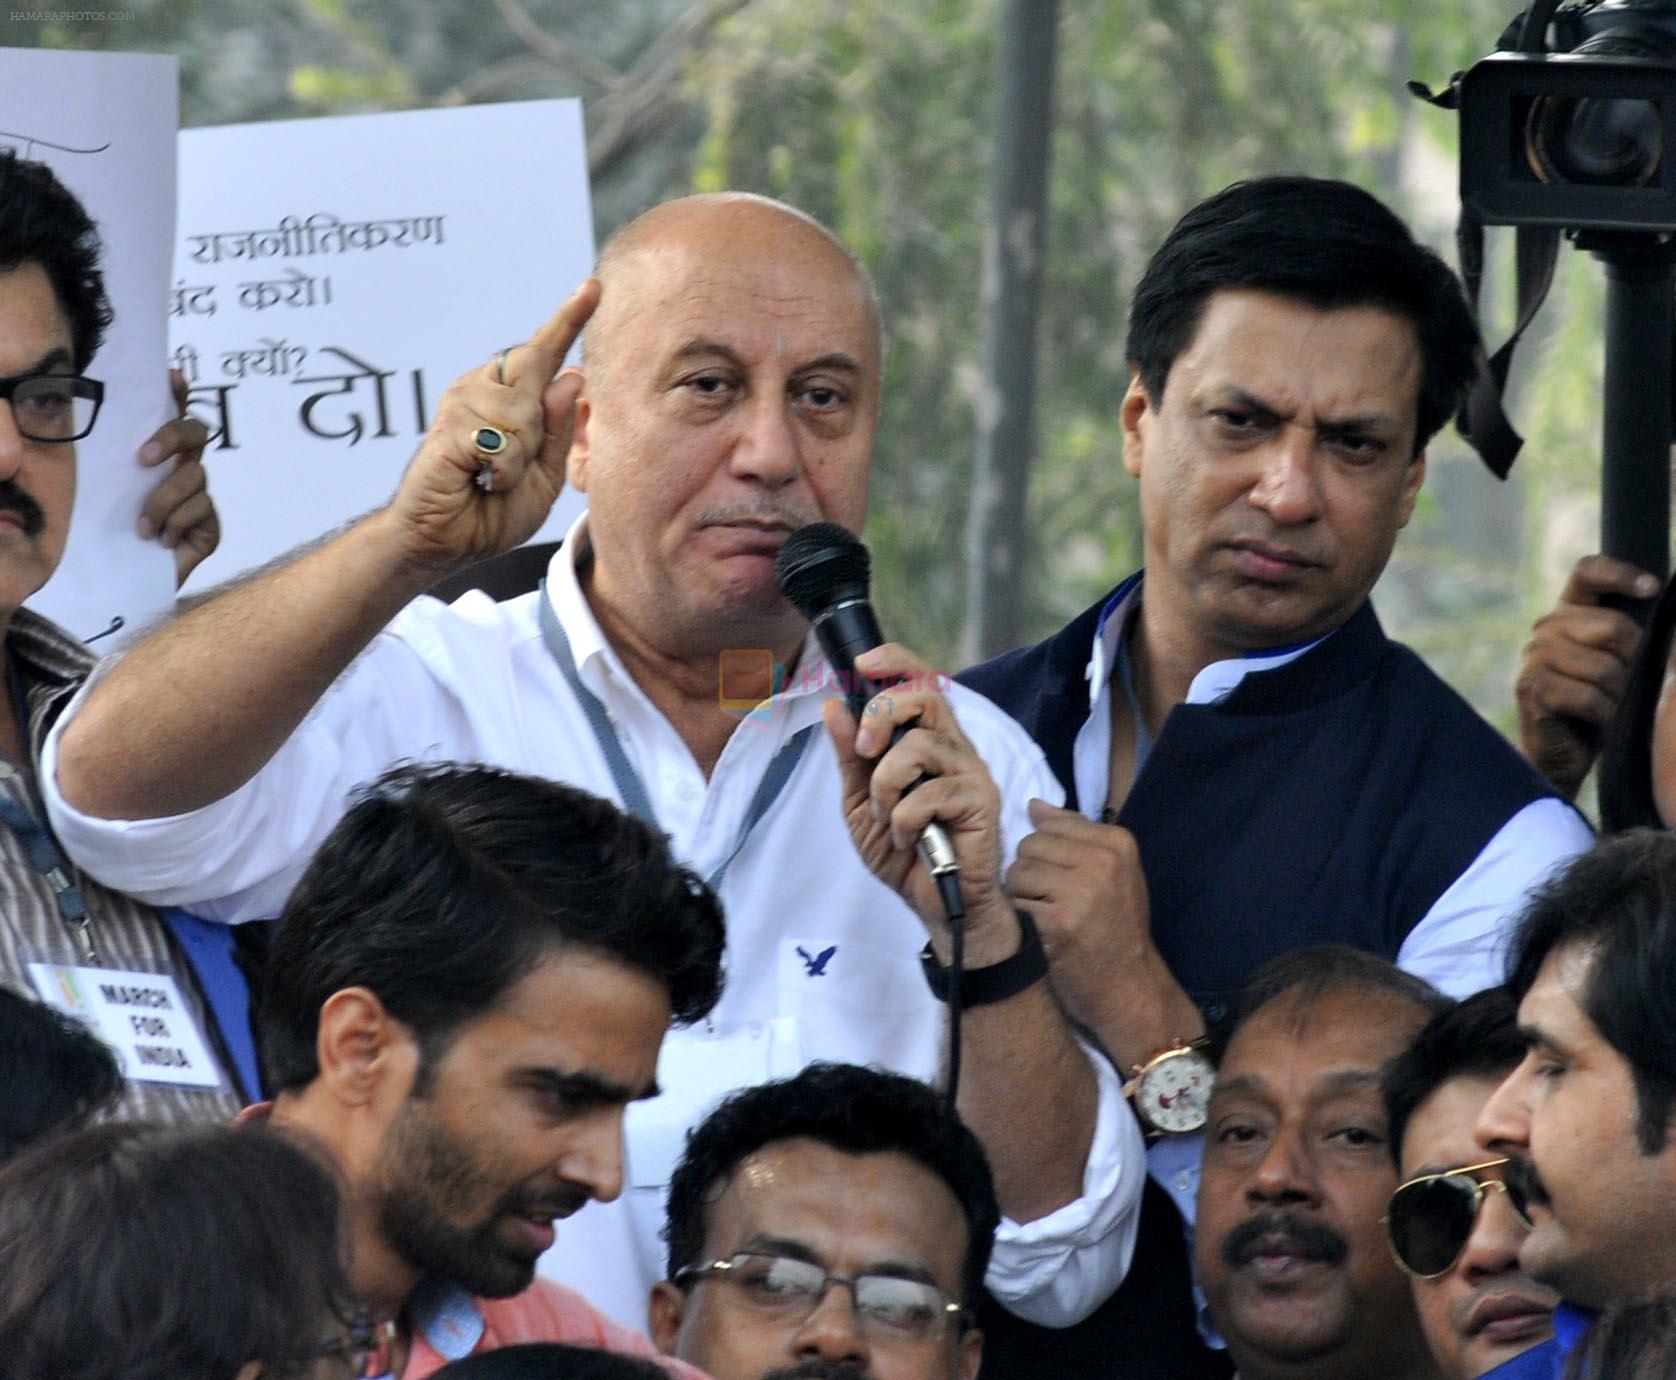 anupam kher at protest with madhur Bhandarkar and Ashok Pandit in delhi on 8th Nov 2015